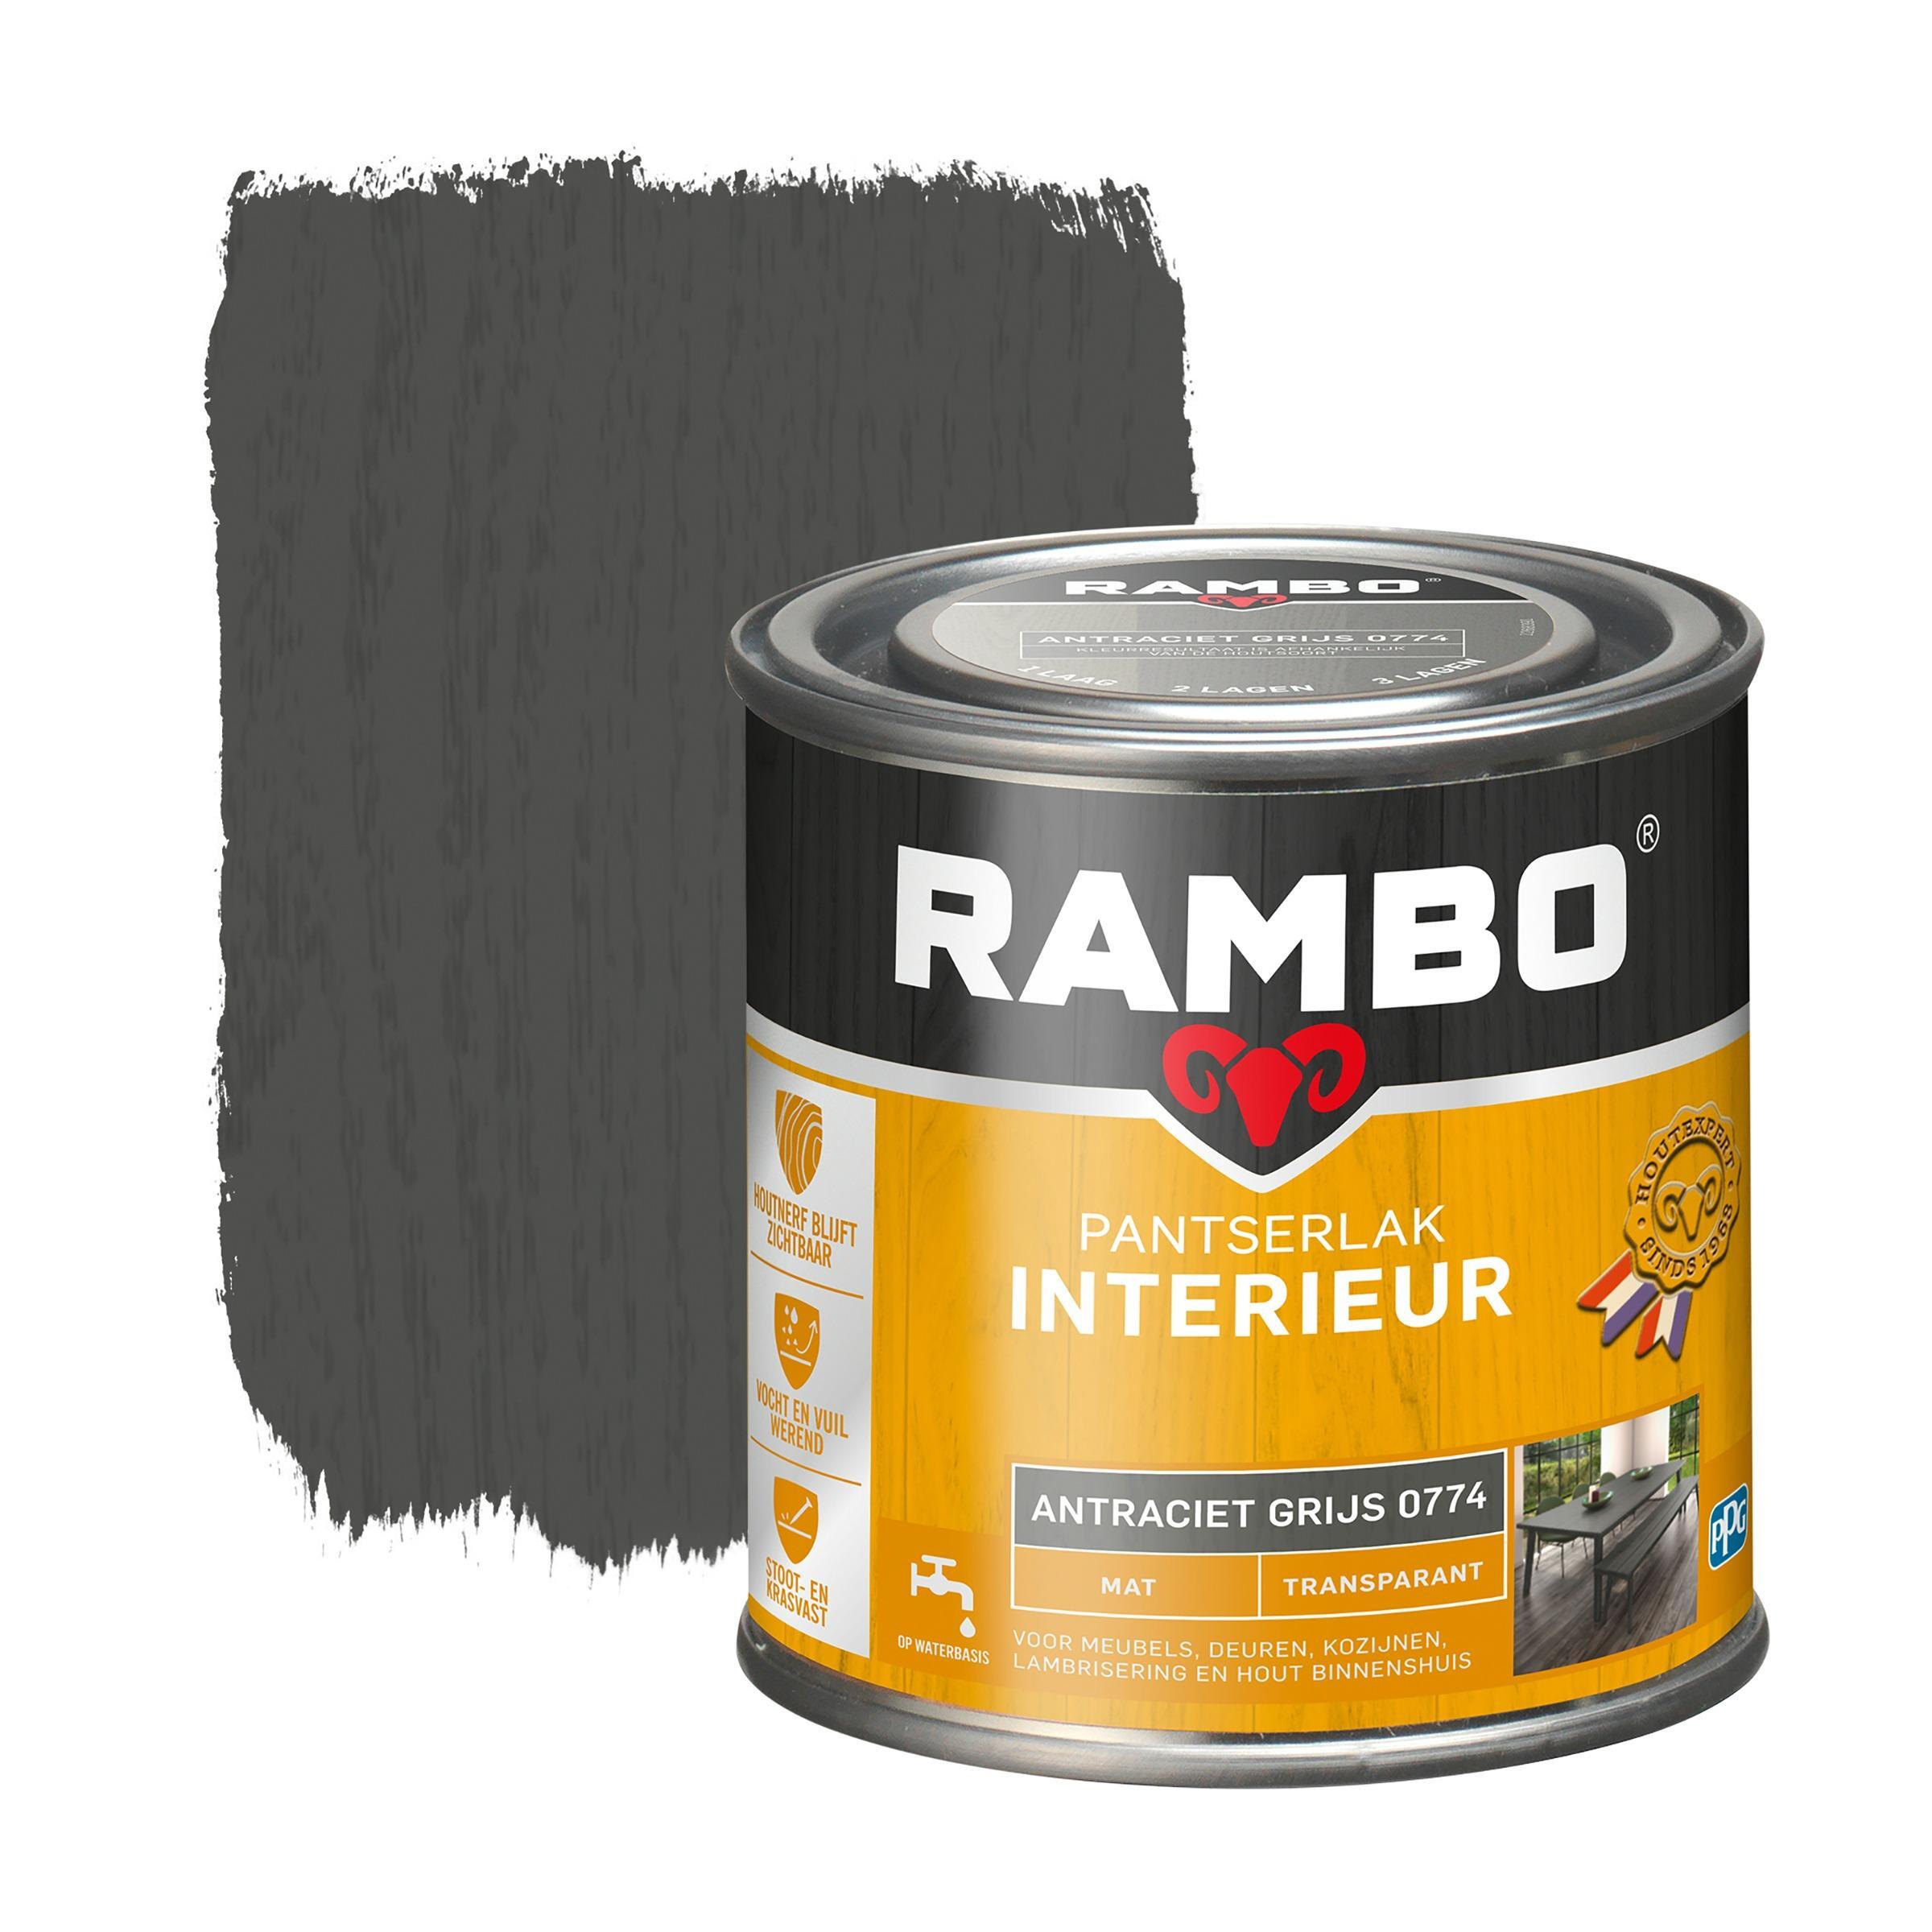 Rambo pantserlak interieur transparant mat antraciet grijs 250 ml